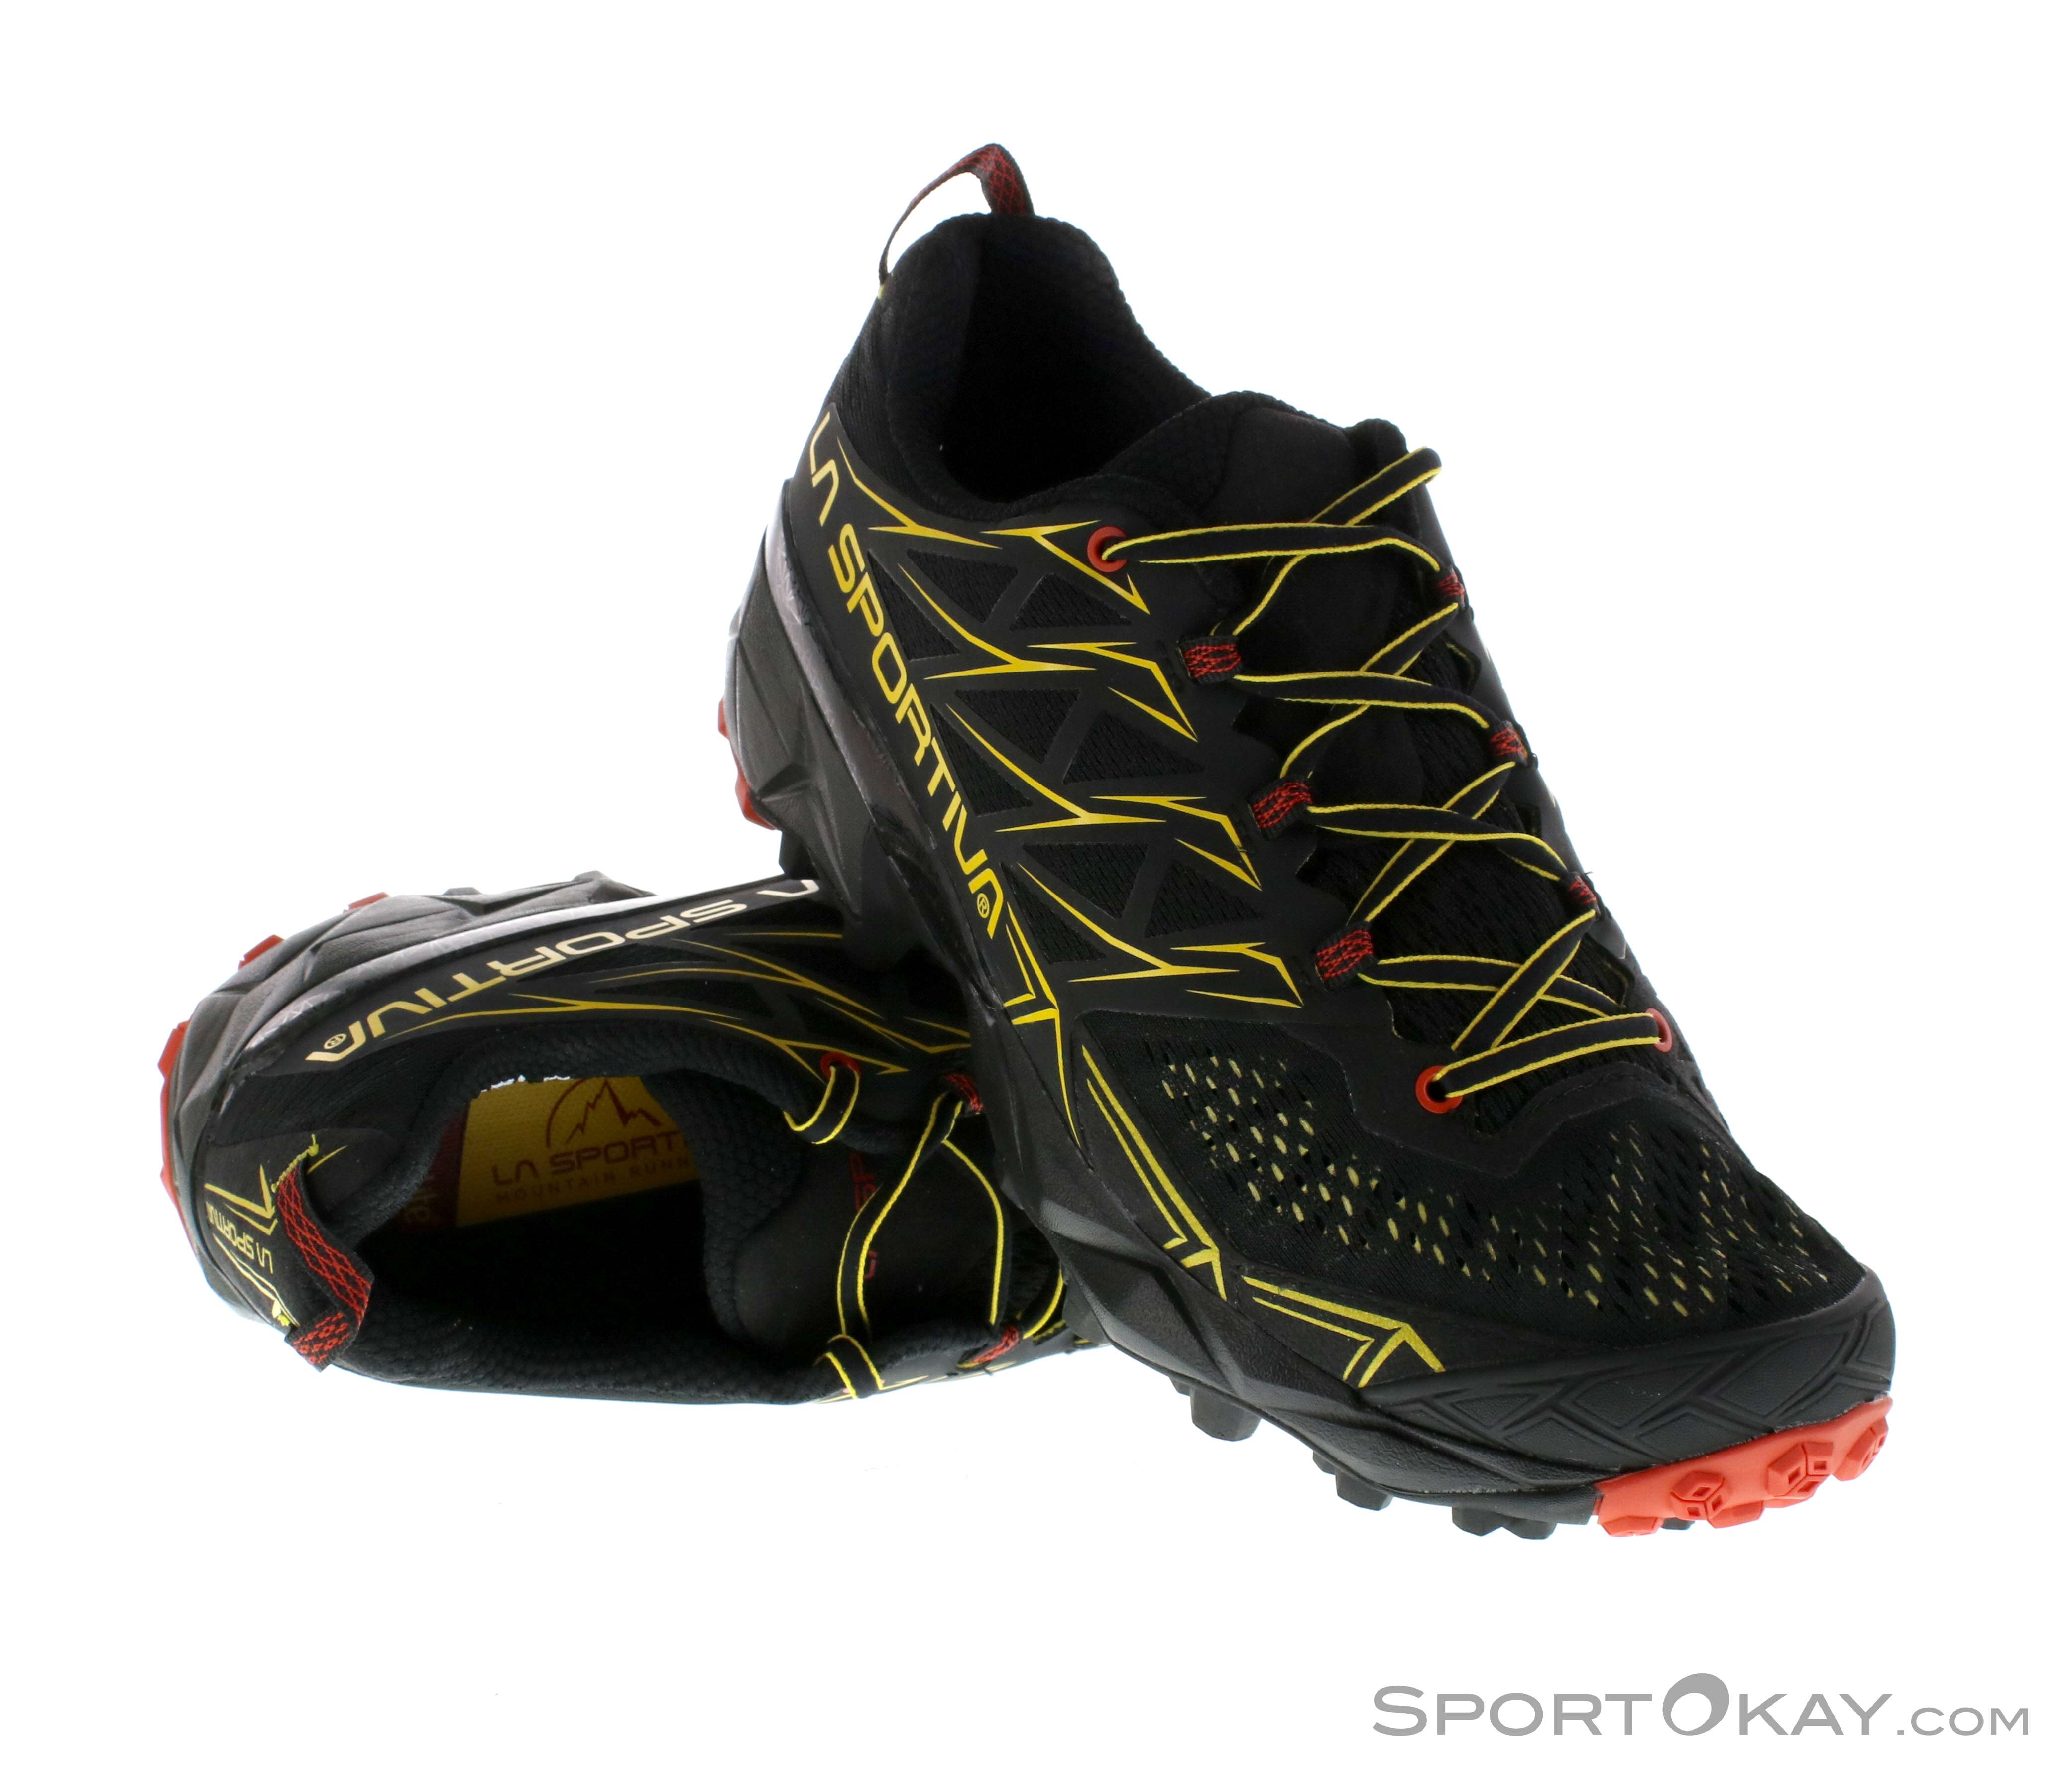 UK 7 40% Off RRP La Sportiva Akrya Men's Trail Running Shoe EU40.5 